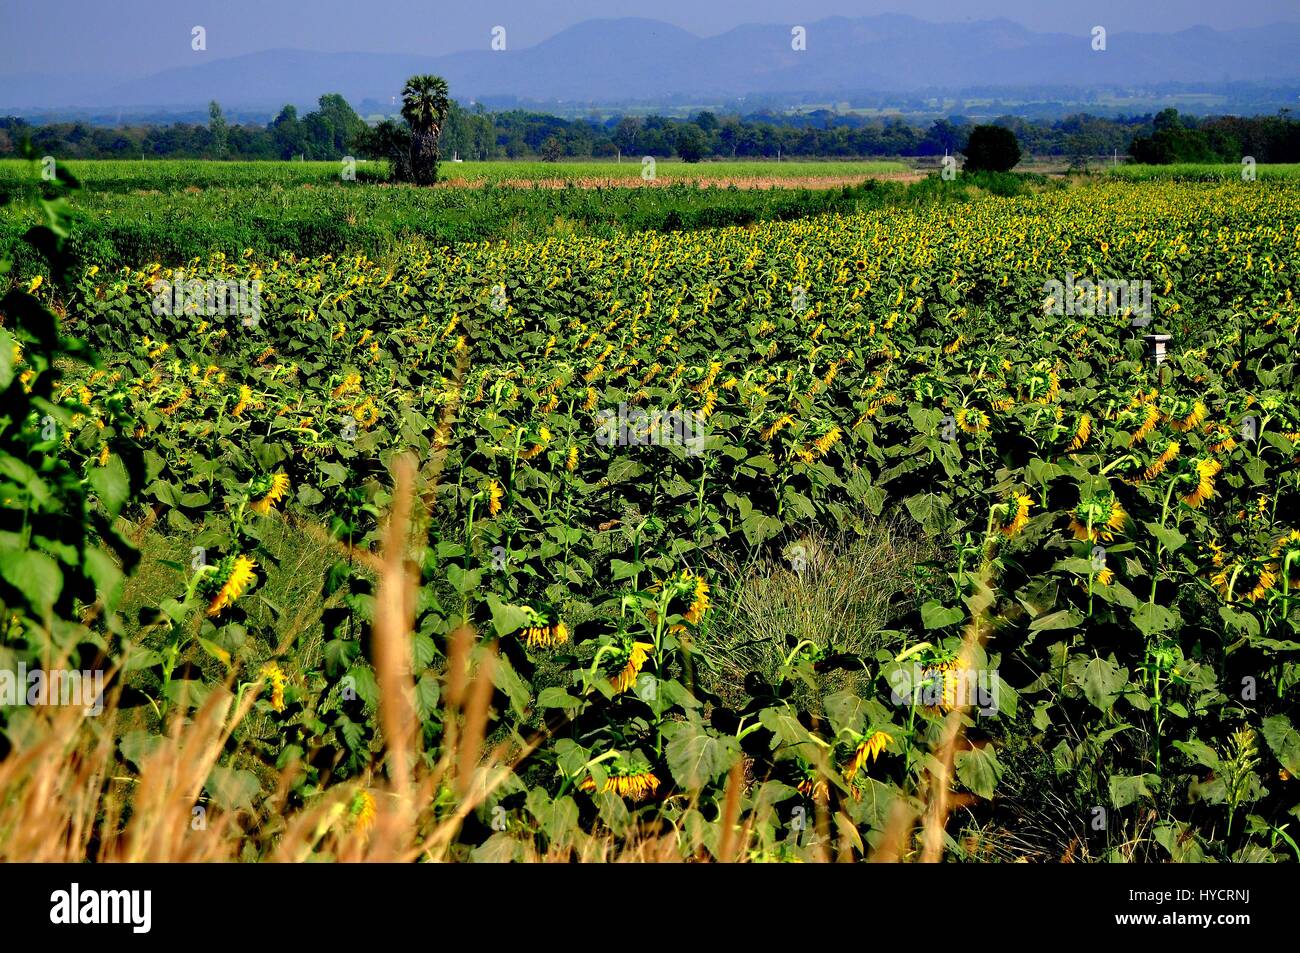 Saraburi, Thaïlande - 8 janvier 2013 : un vaste champ de tournesols jaunes, un produit agricole commerciale importante dans le Saraburi / Lopburi regio Banque D'Images